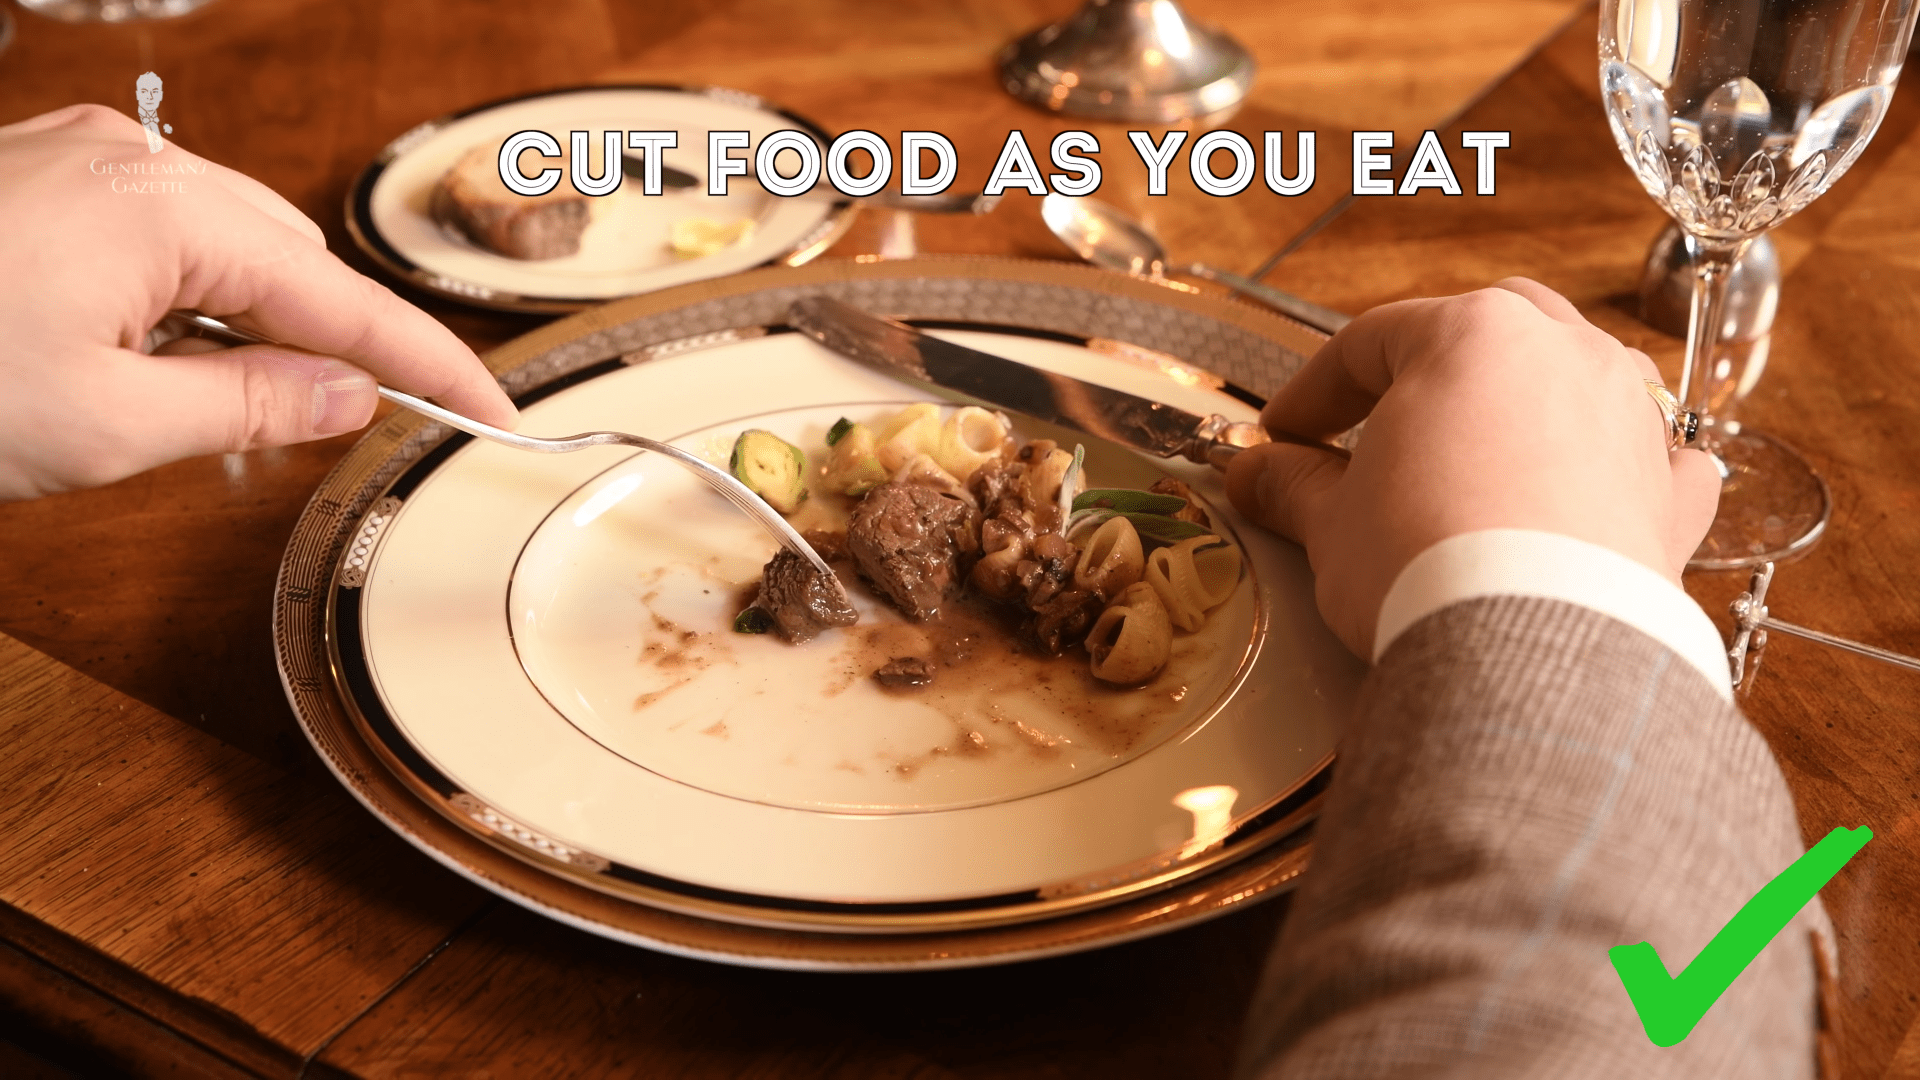 Table Manners Ultimate Guide To Dining Etiquette Gentleman S Gazette,Potato Bread Walmart